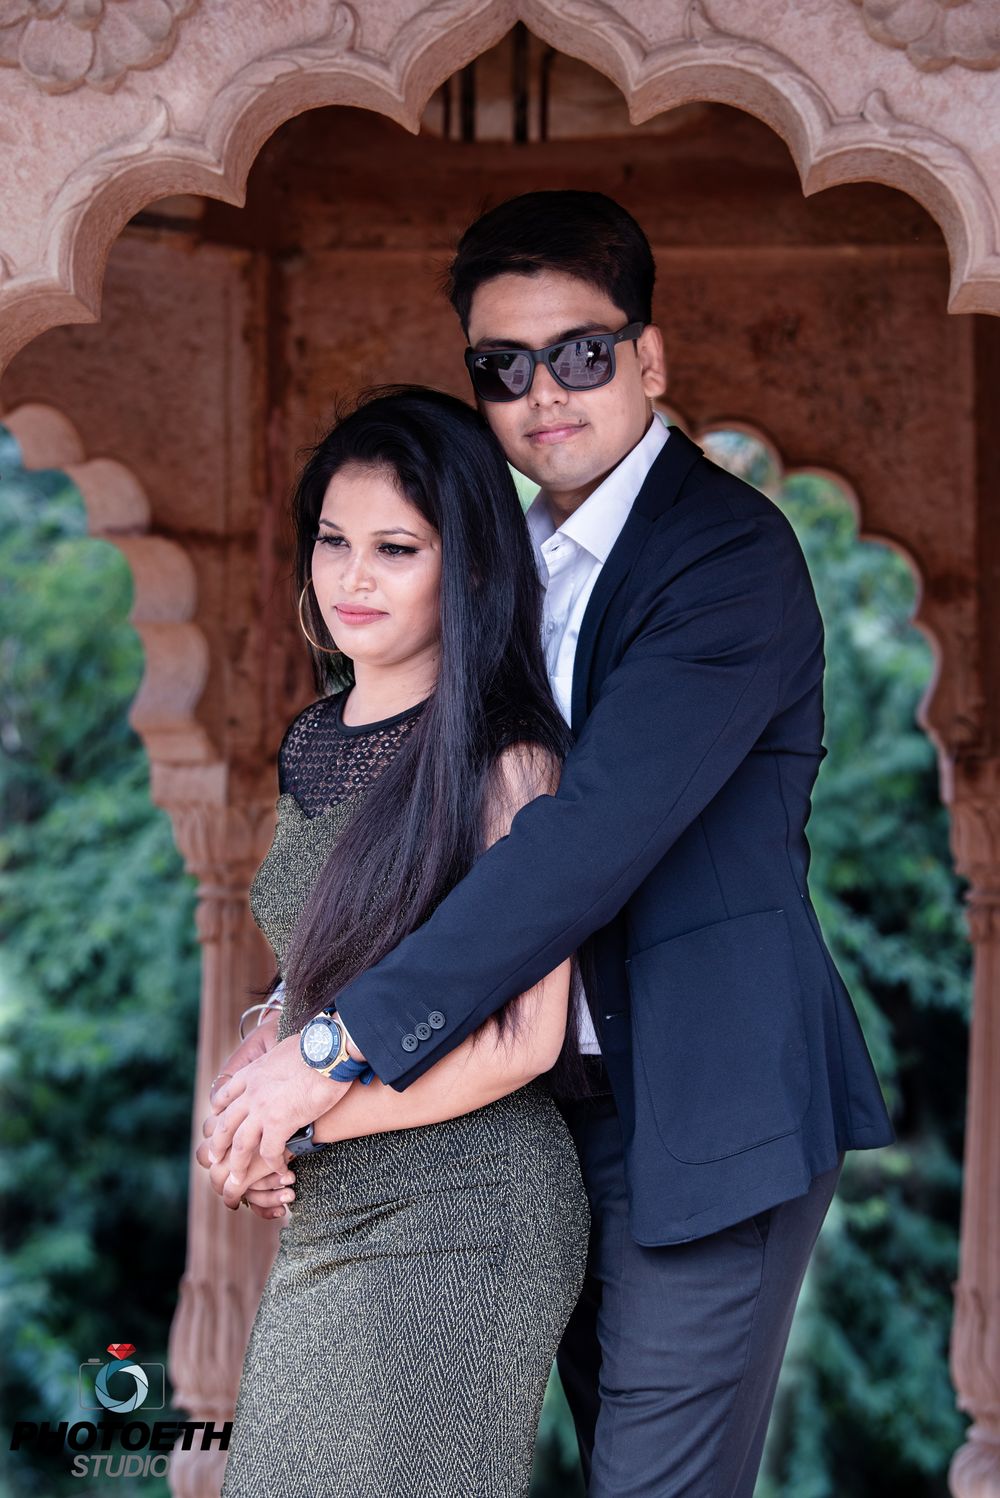 Photo From Pre-wedding of Vivek and Anshmita, 20th November 2019 - By Photoeth Studio